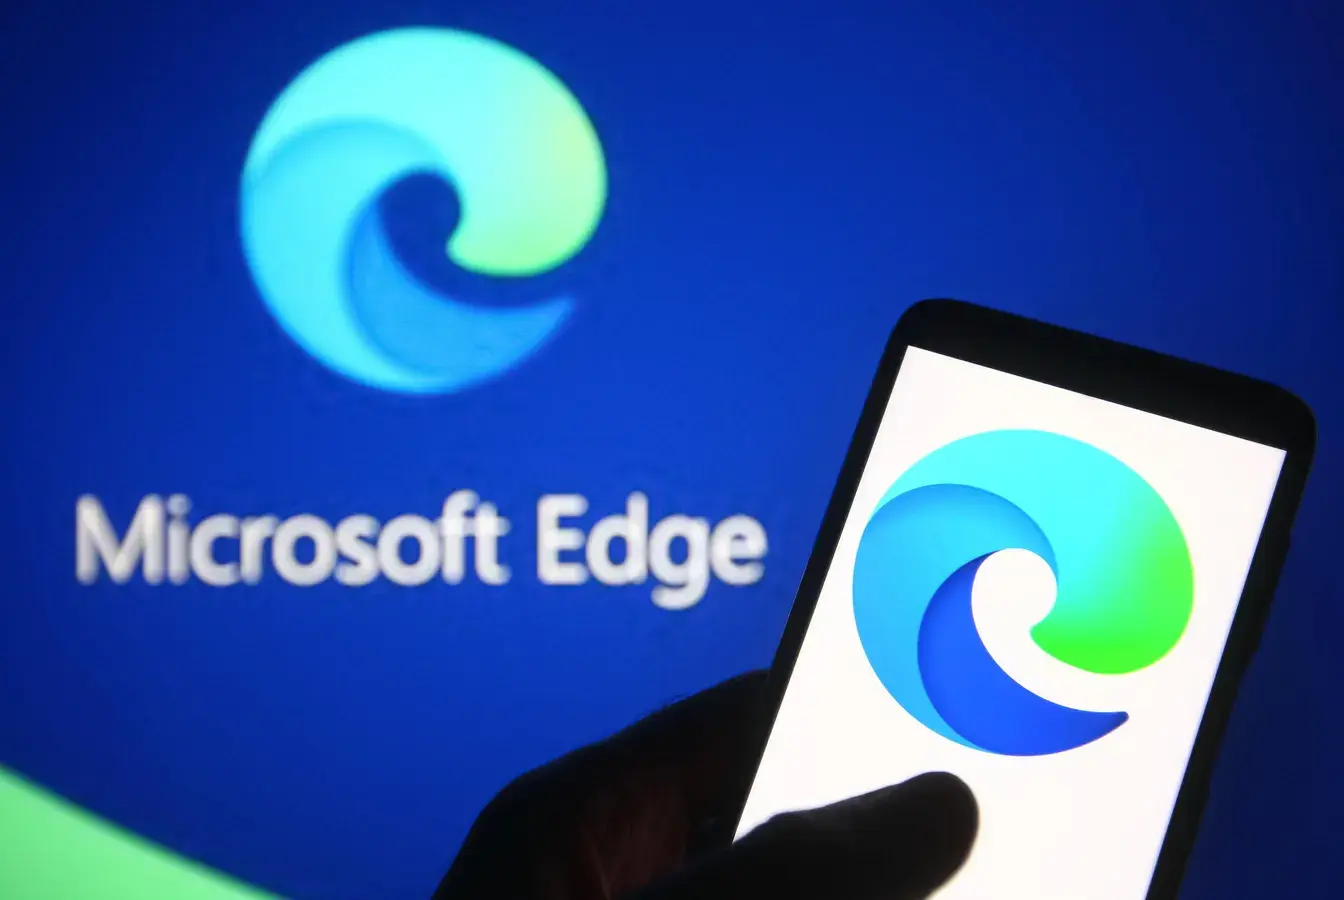 Microsoft fixed Edge crashes when deleting favorites